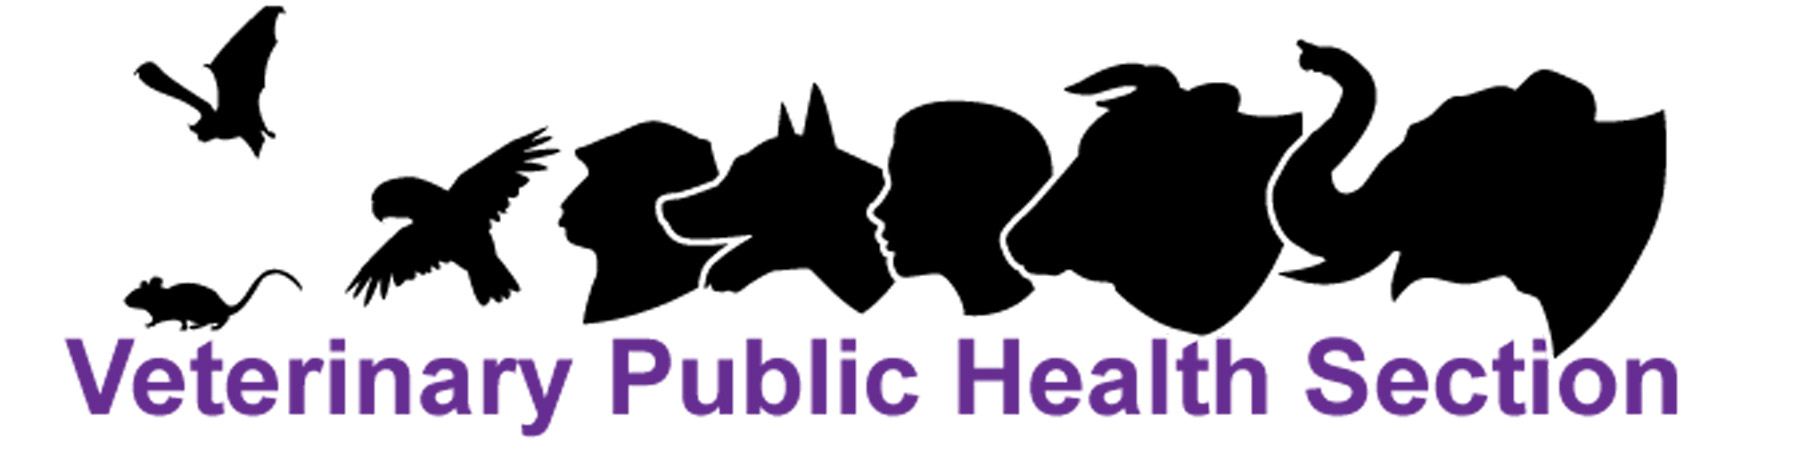 CDPH Veterinary Public Health Section logo